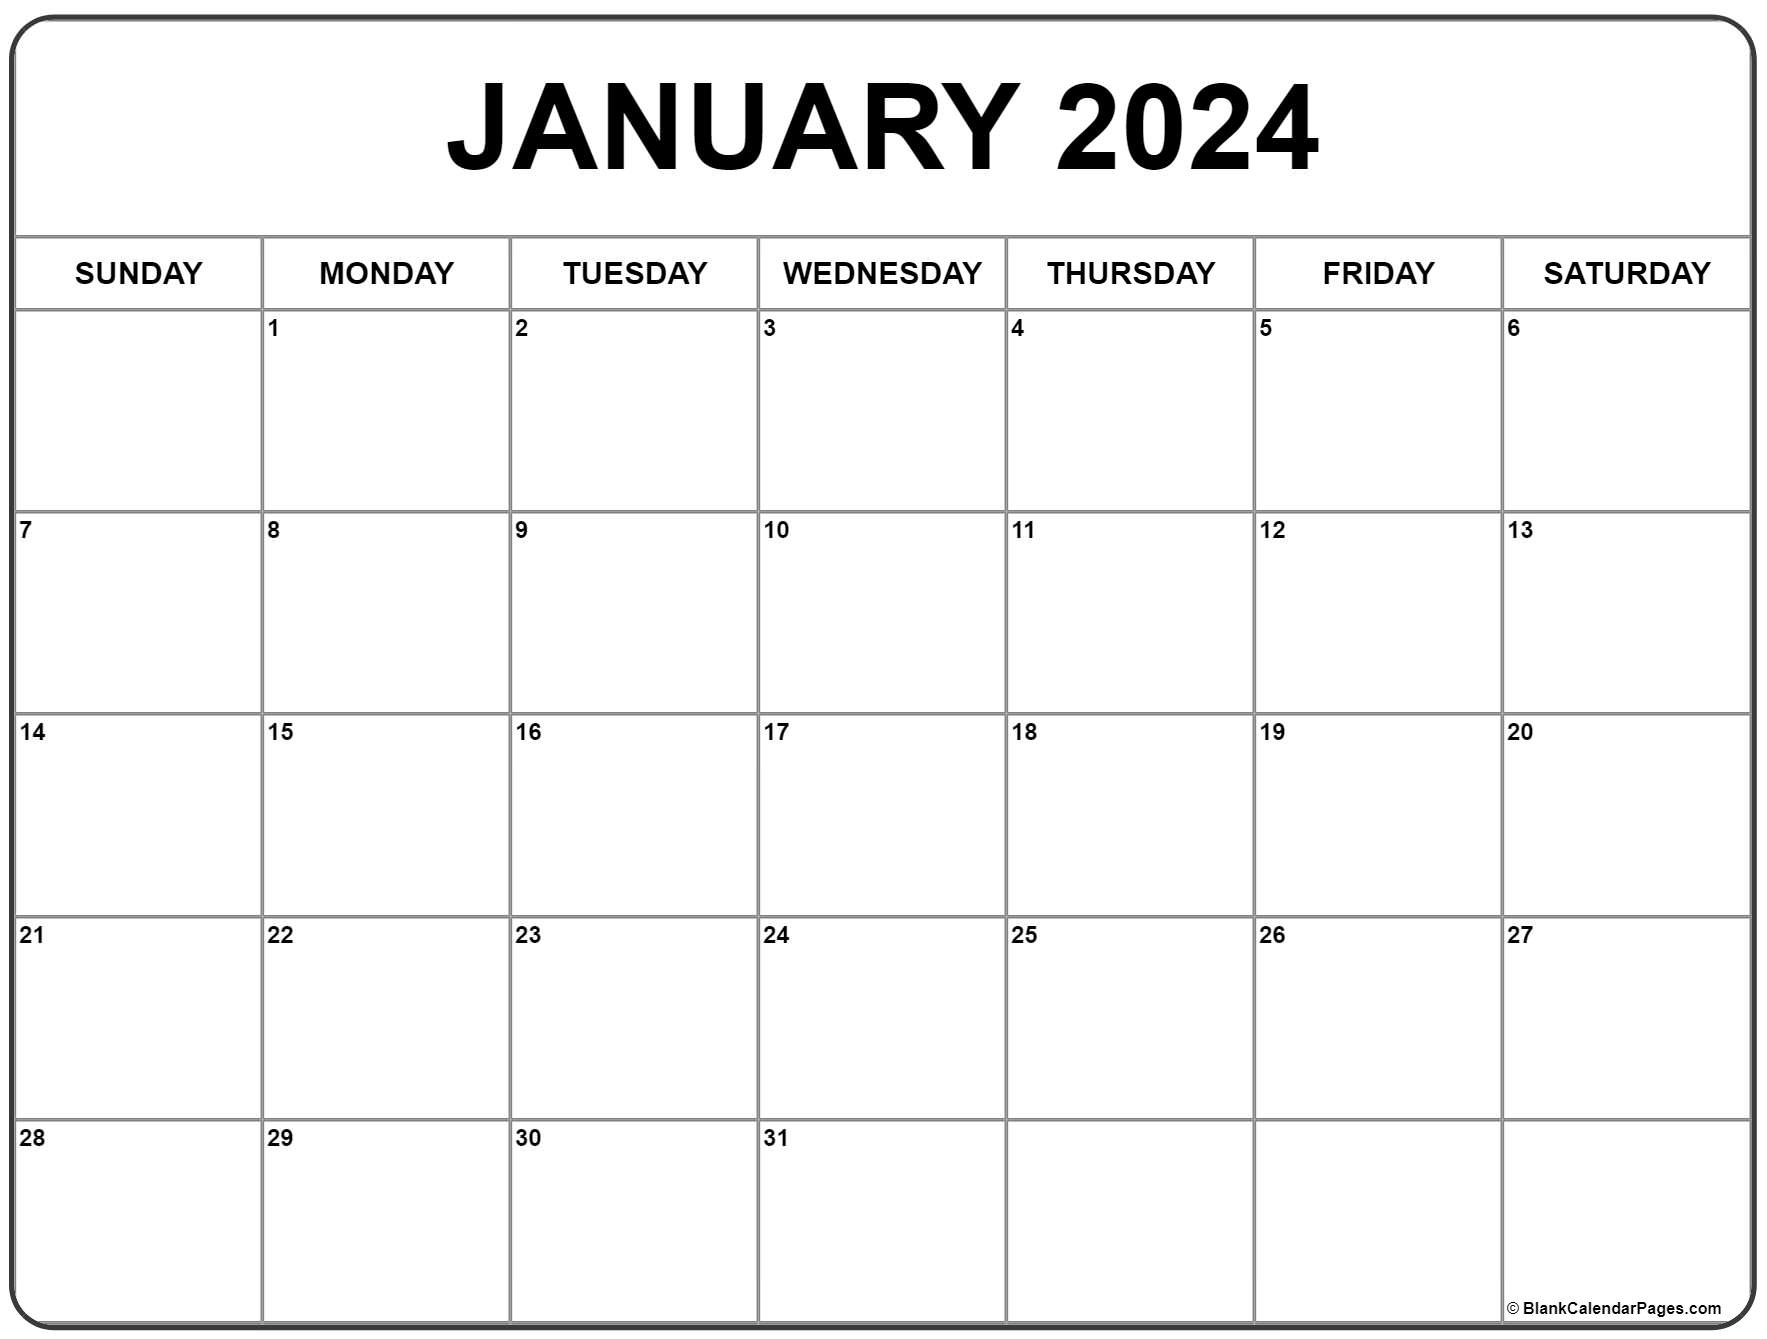 January 2024 Calendar | Free Printable Calendar for Calendar 2024 Free Printable Monthly